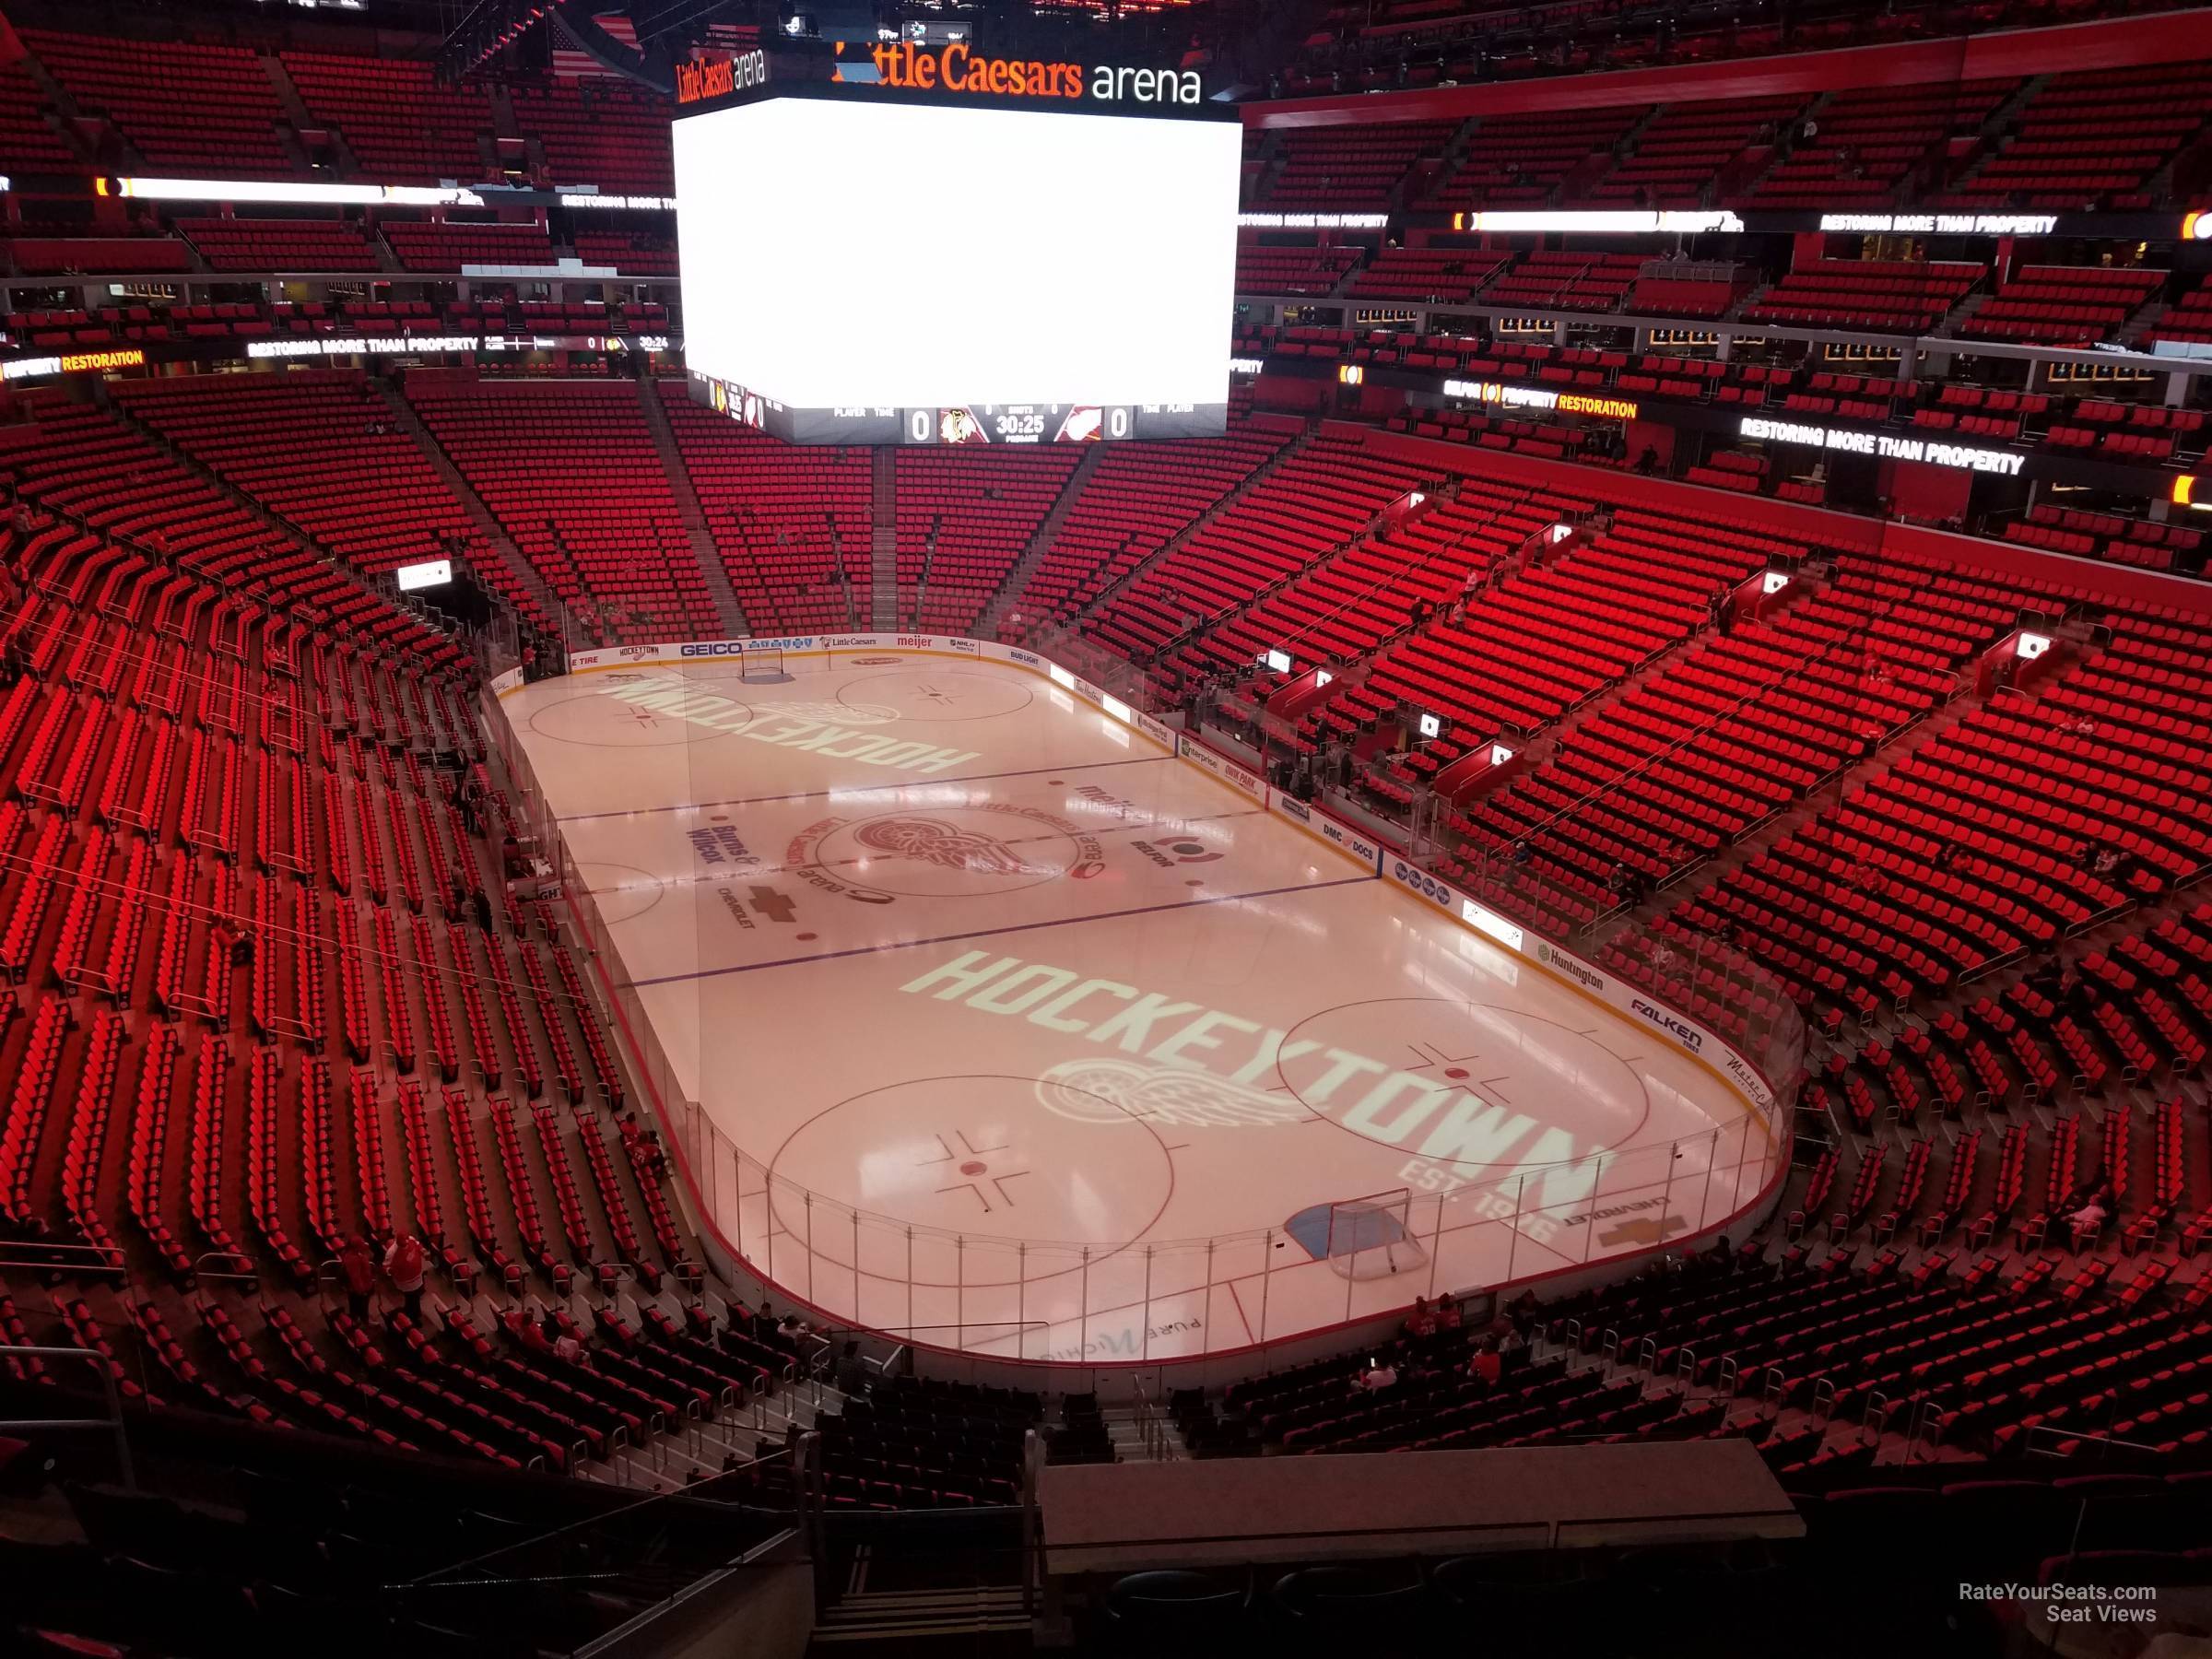 mezzanine 4, row 4 seat view  for hockey - little caesars arena